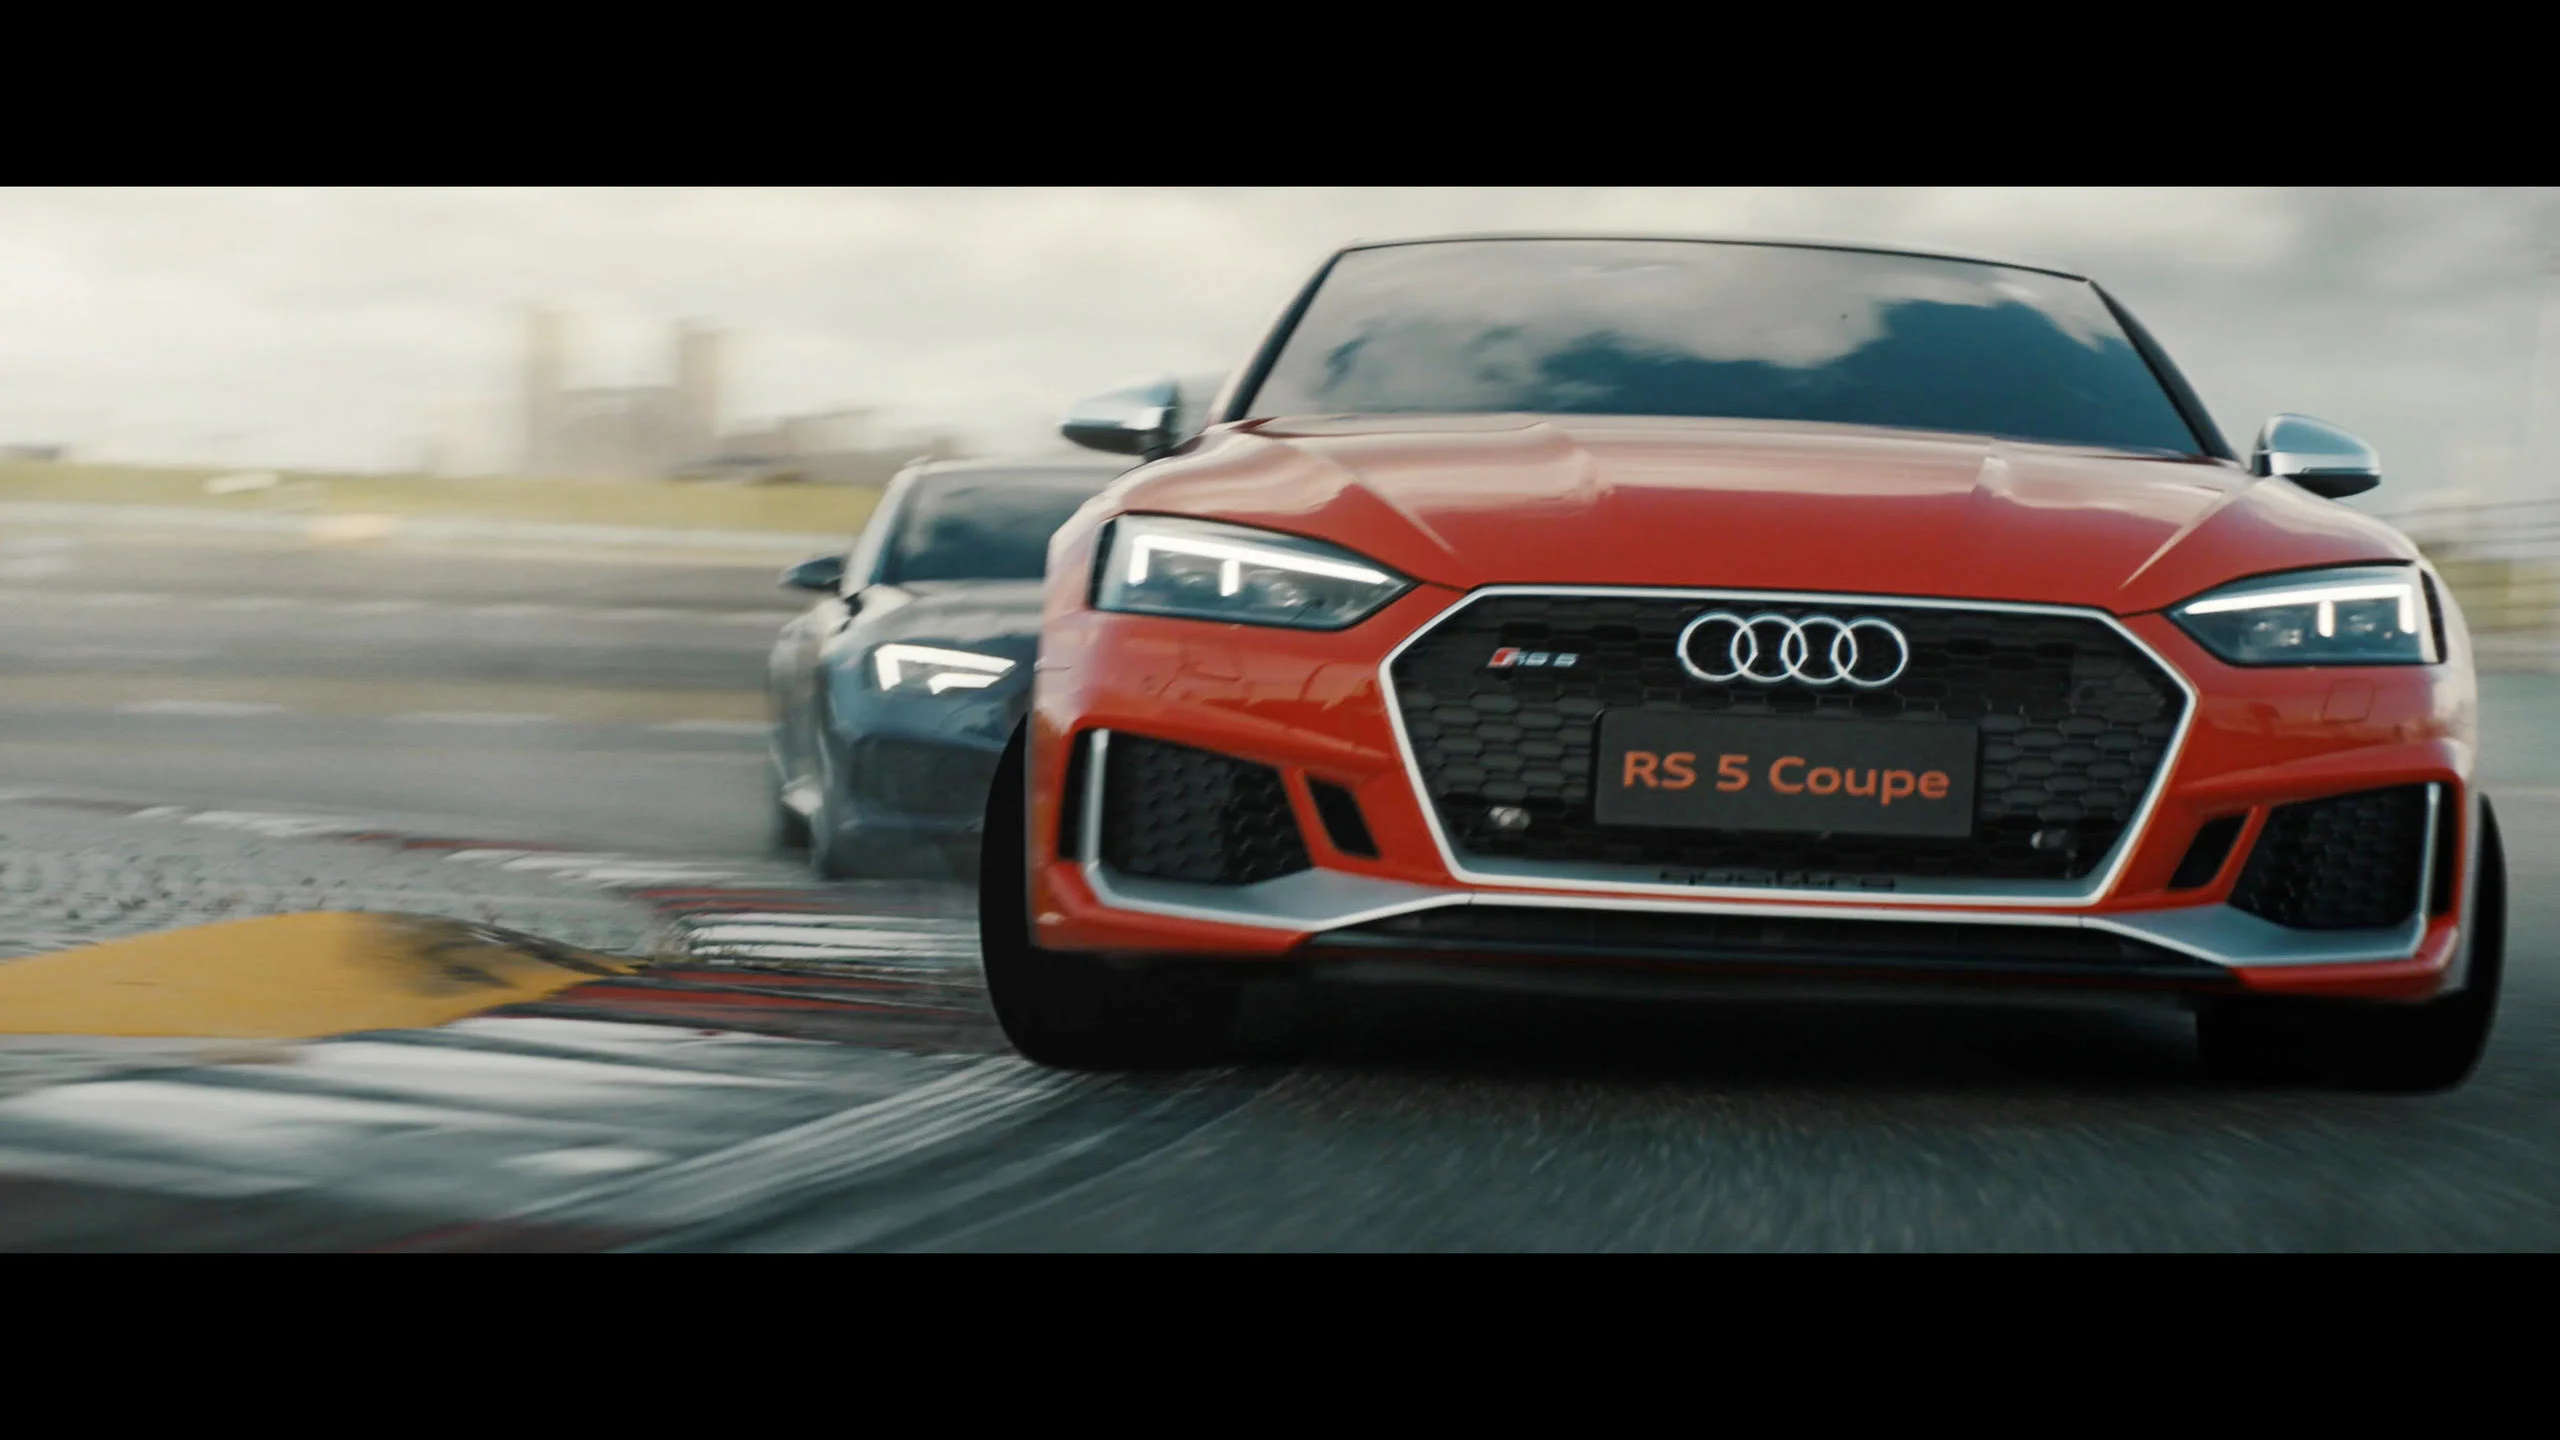 Audi - Bred for Track - Alessandro Pacciani on Vimeo